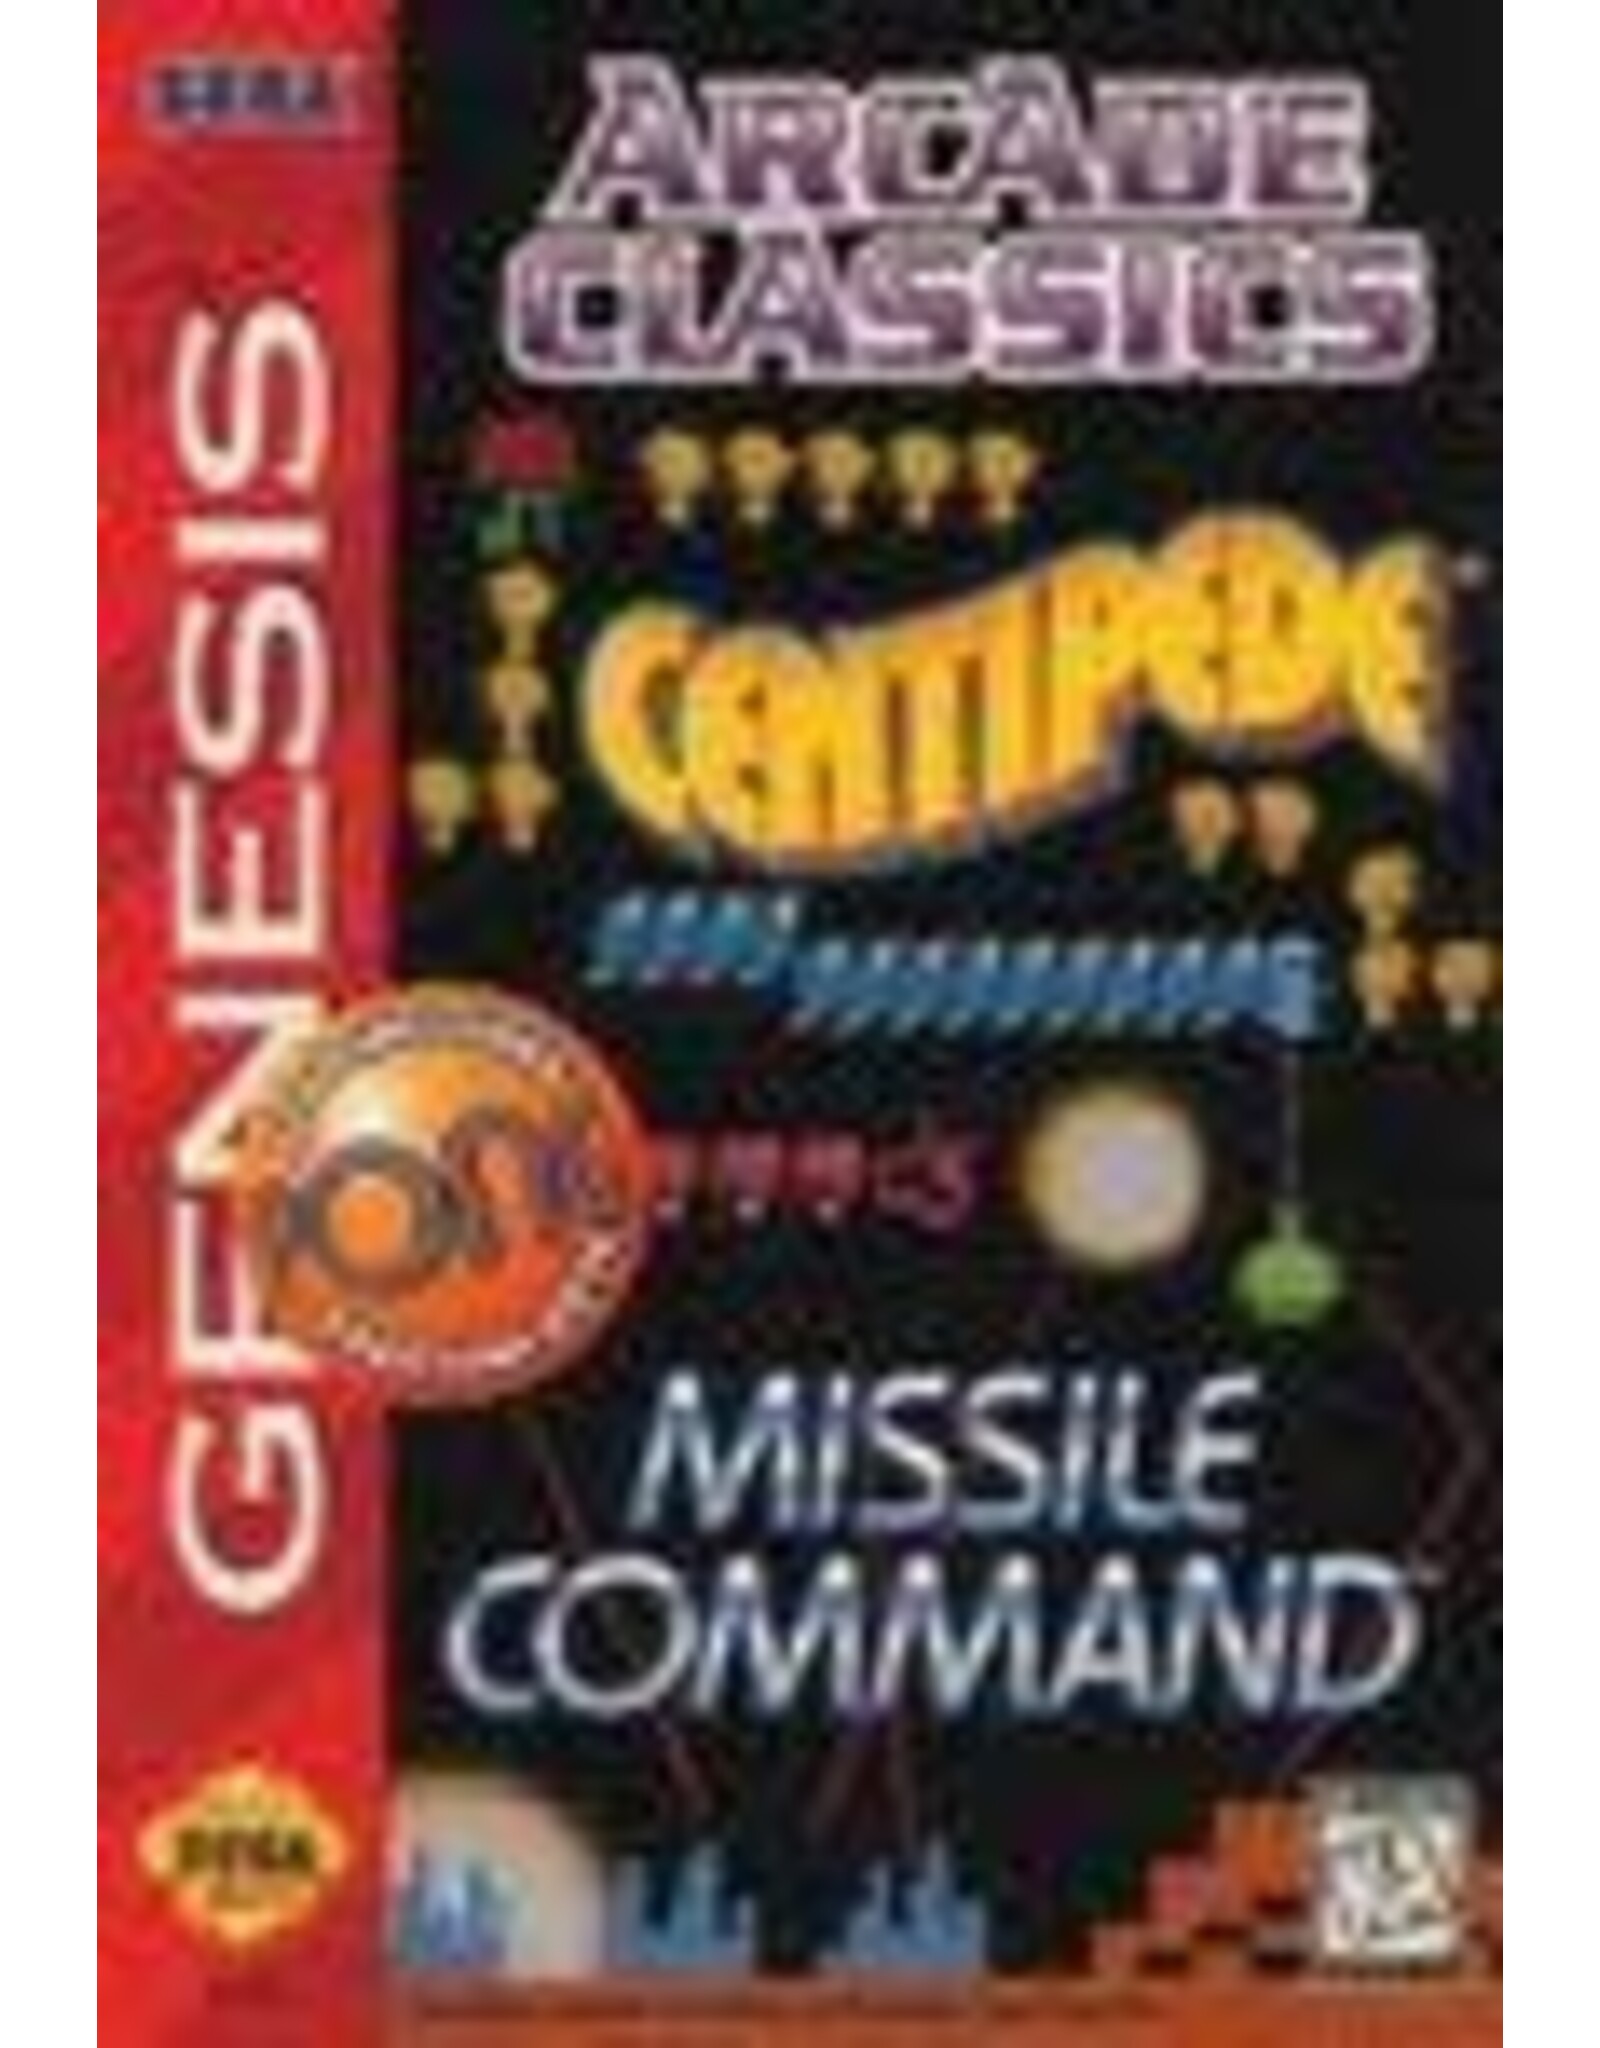 Sega Genesis Arcade Classics (CiB, Damaged Box)